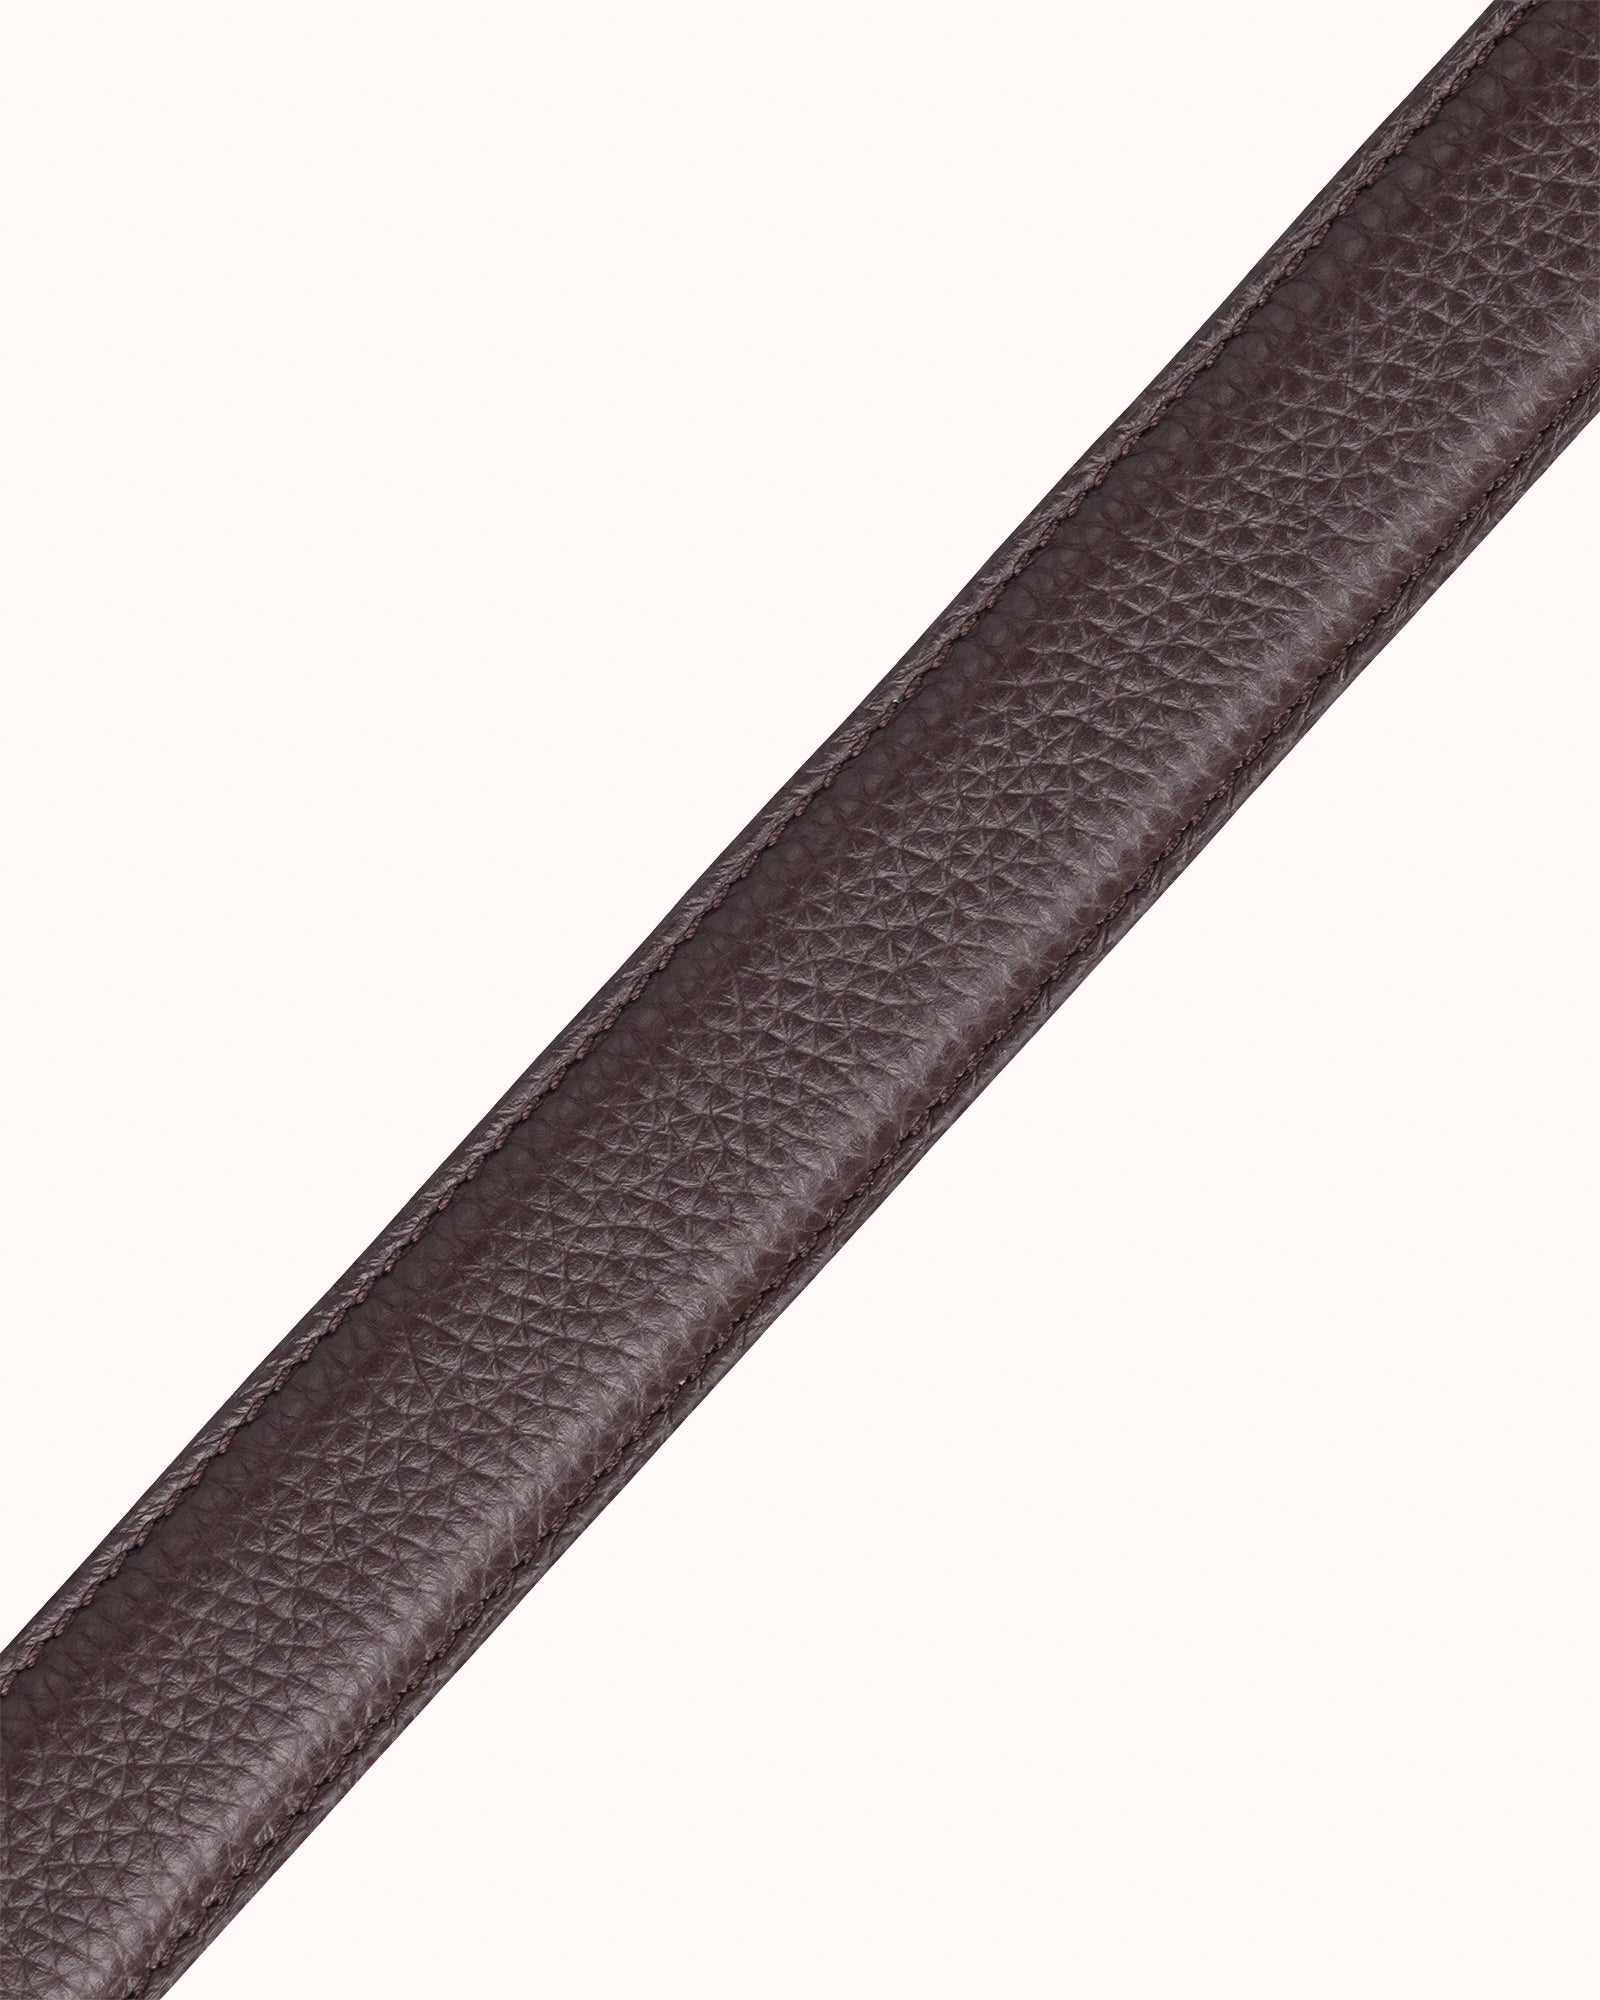 Belt - Brown Leather